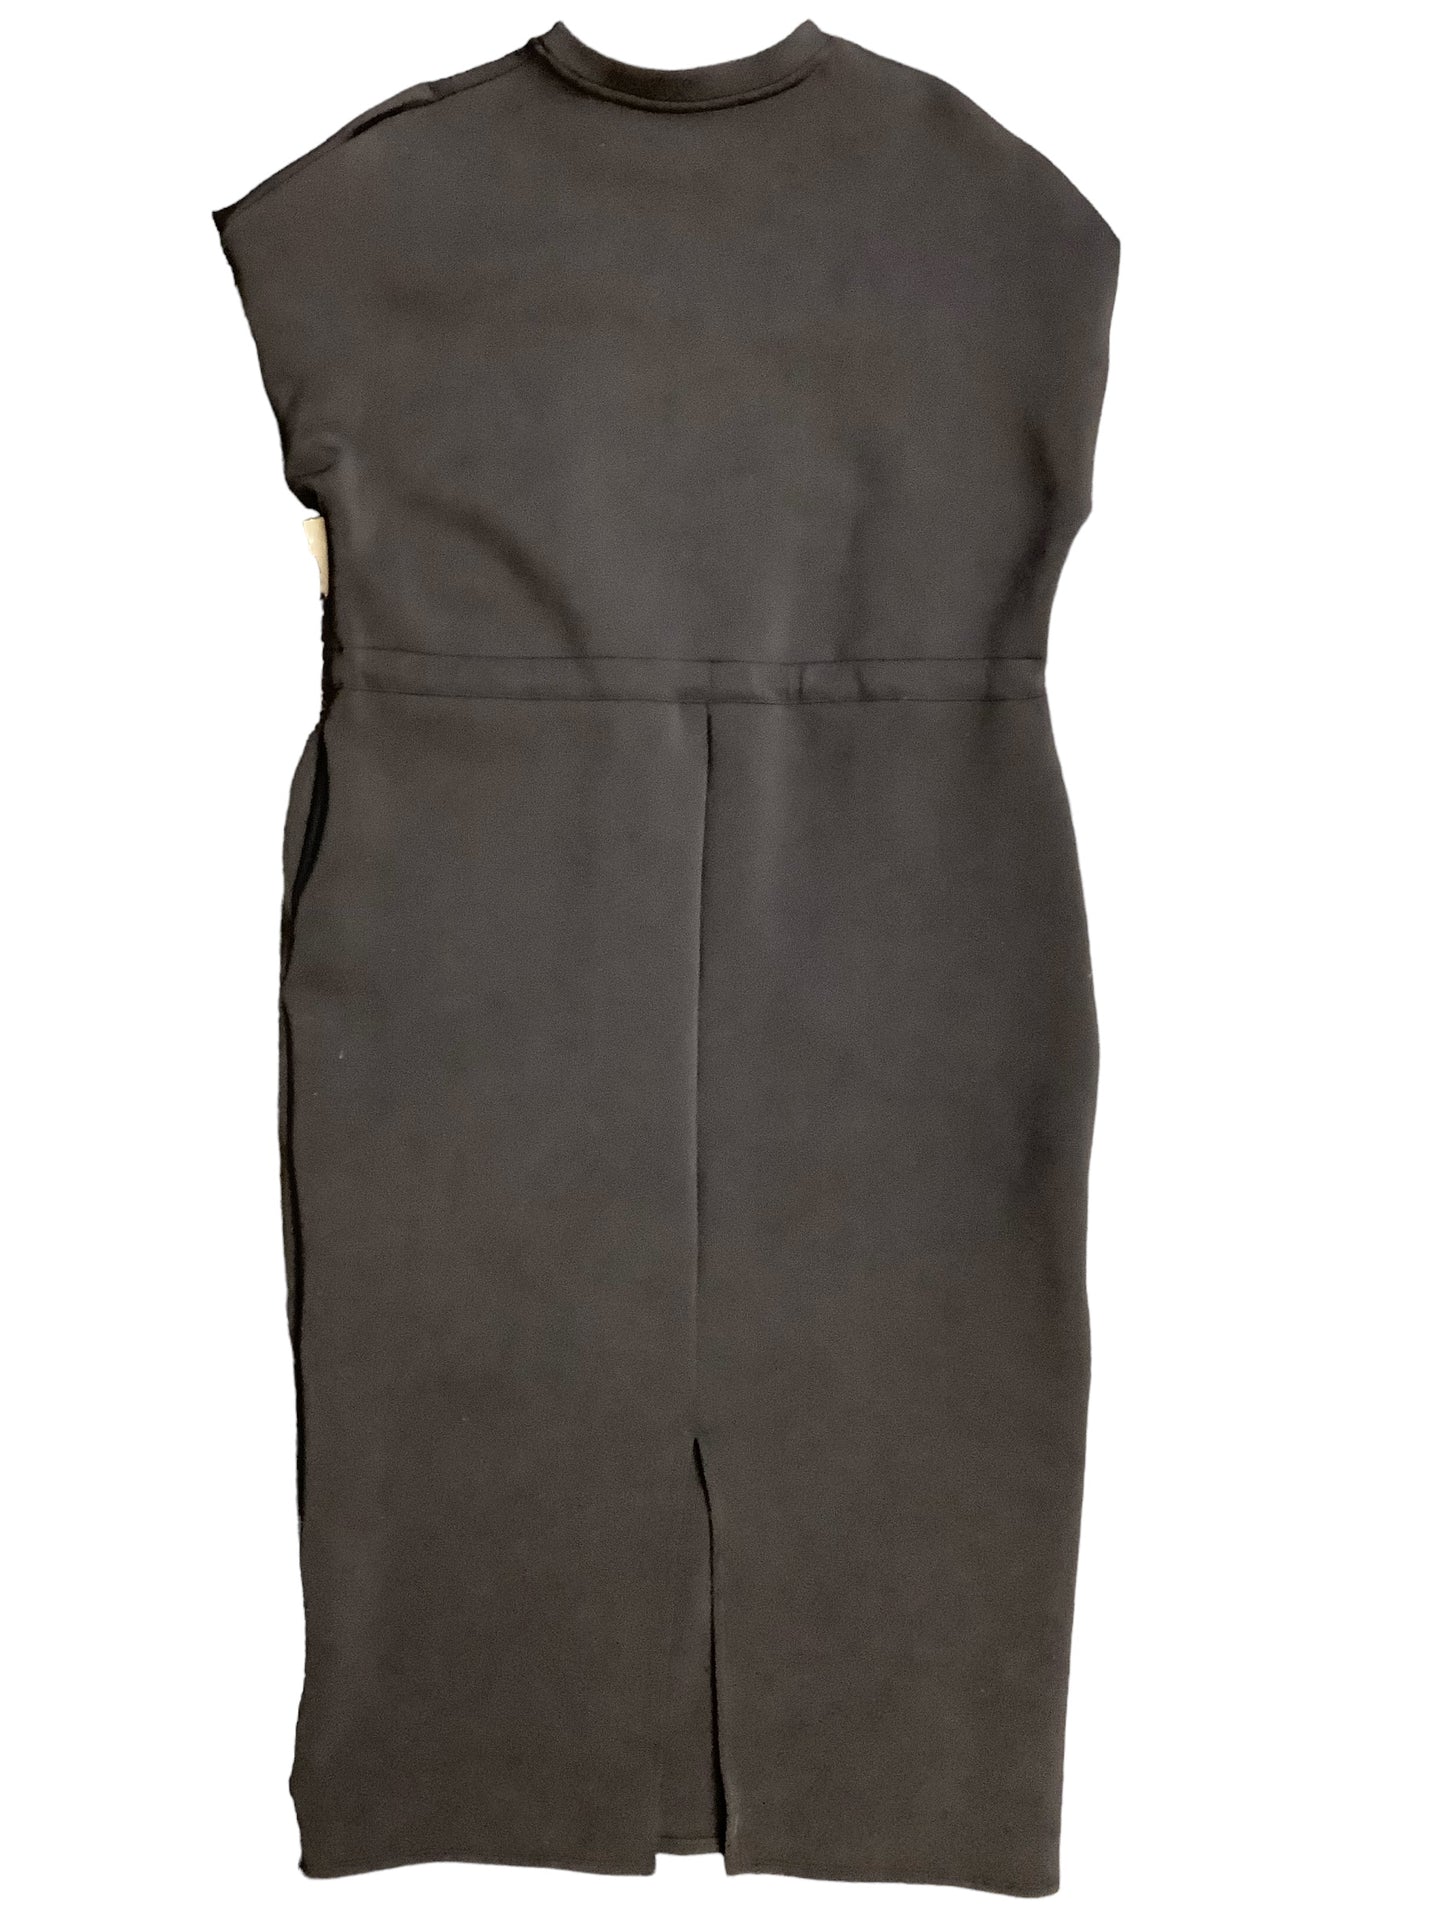 Dress Casual Maxi By Sweaty Betty  Size: S